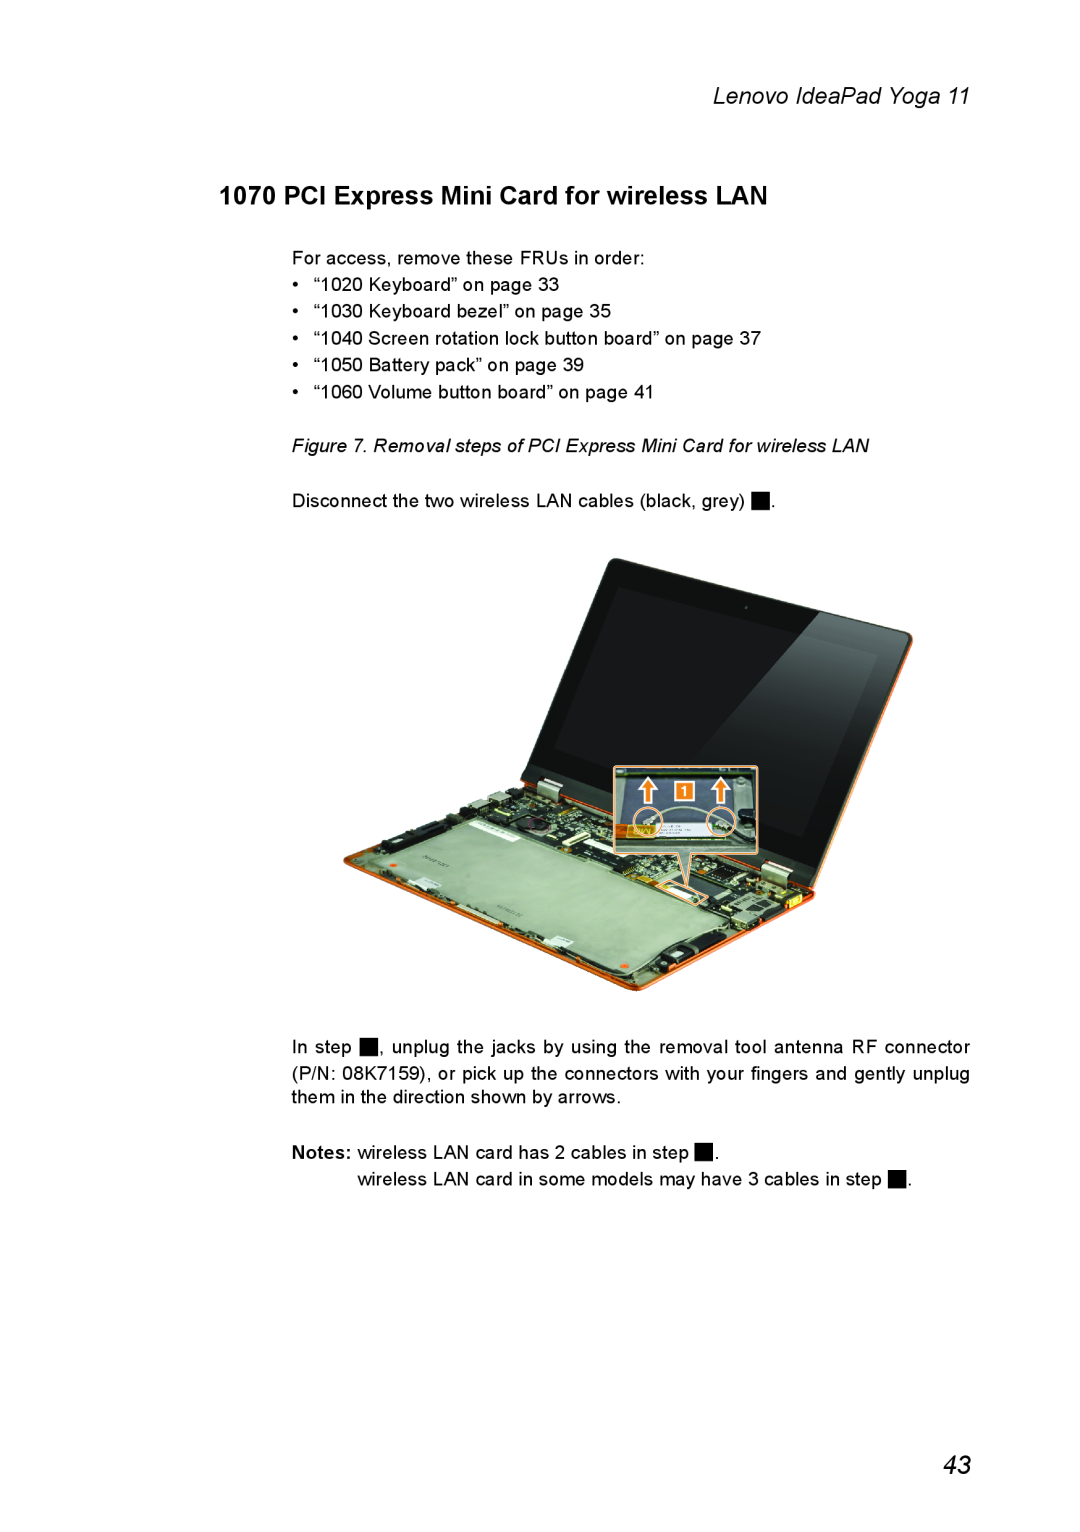 Lenovo 11 manual Removal steps of PCI Express Mini Card for wireless LAN, Lenovo IdeaPad Yoga 